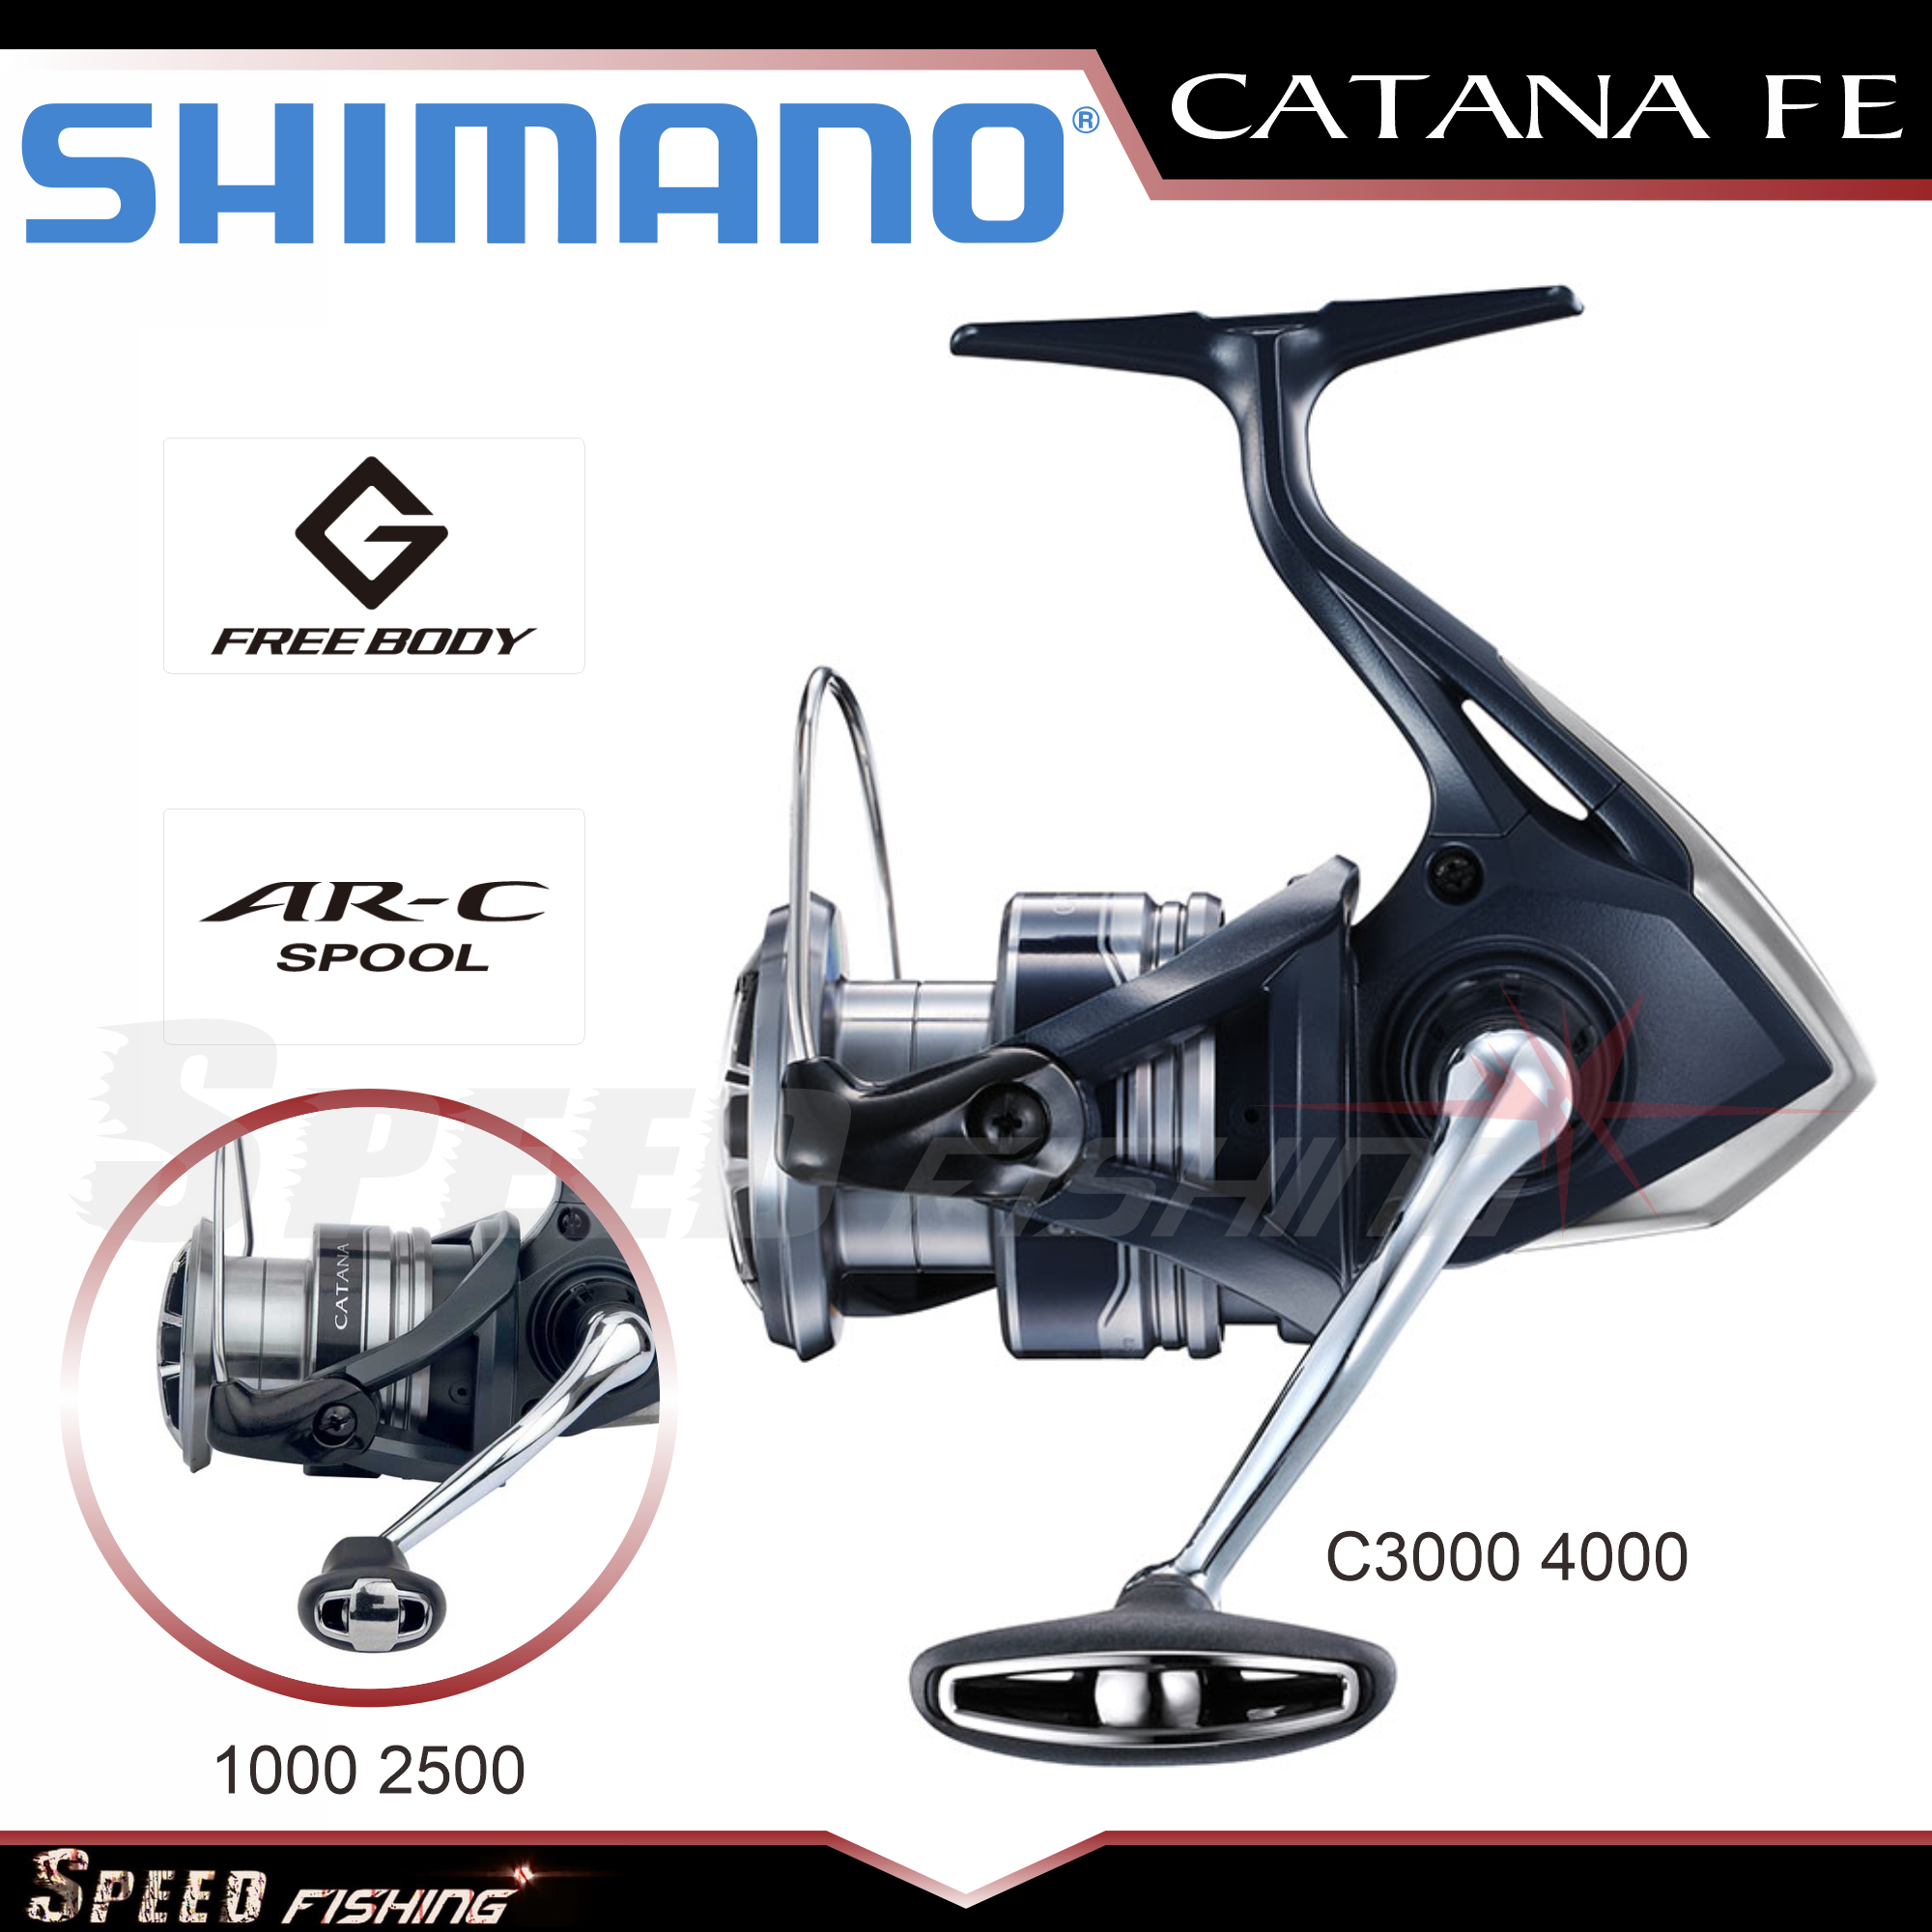 Reel Shimano Catana FE 2022 1000 2000 2500 3000 4000 Spinning